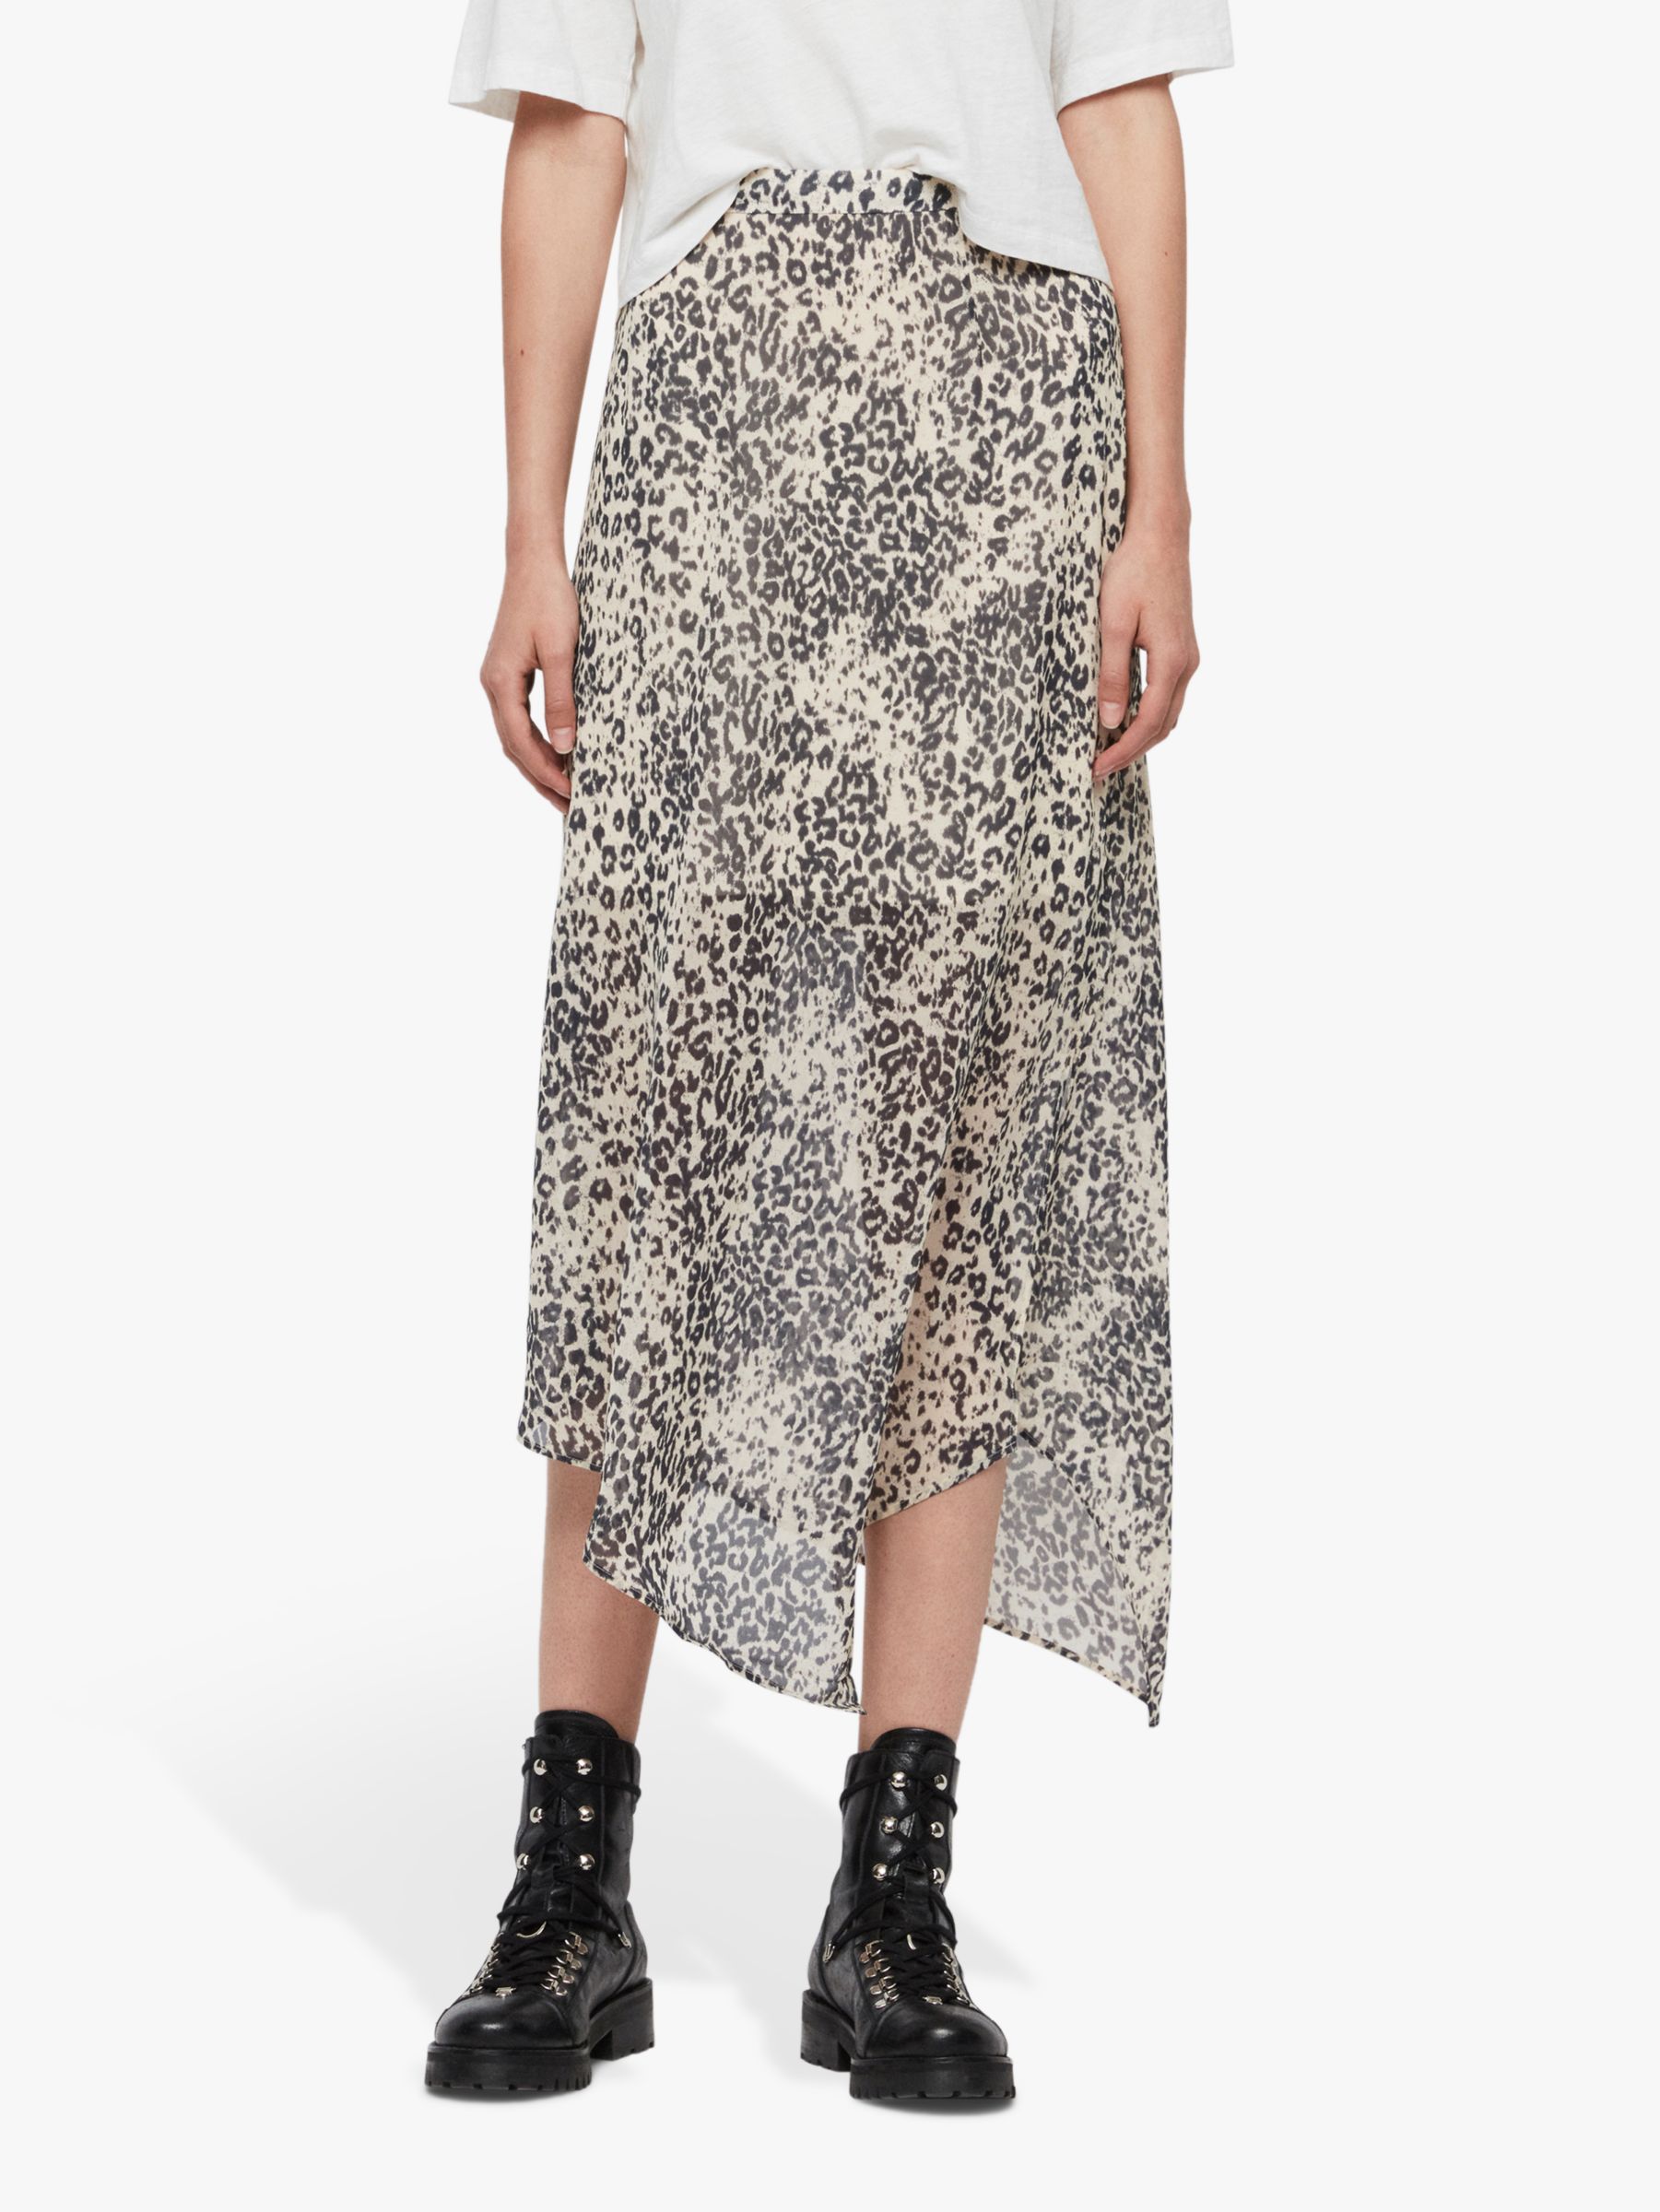 AllSaints Rhea Patch Leopard Print Skirt, Ivory White